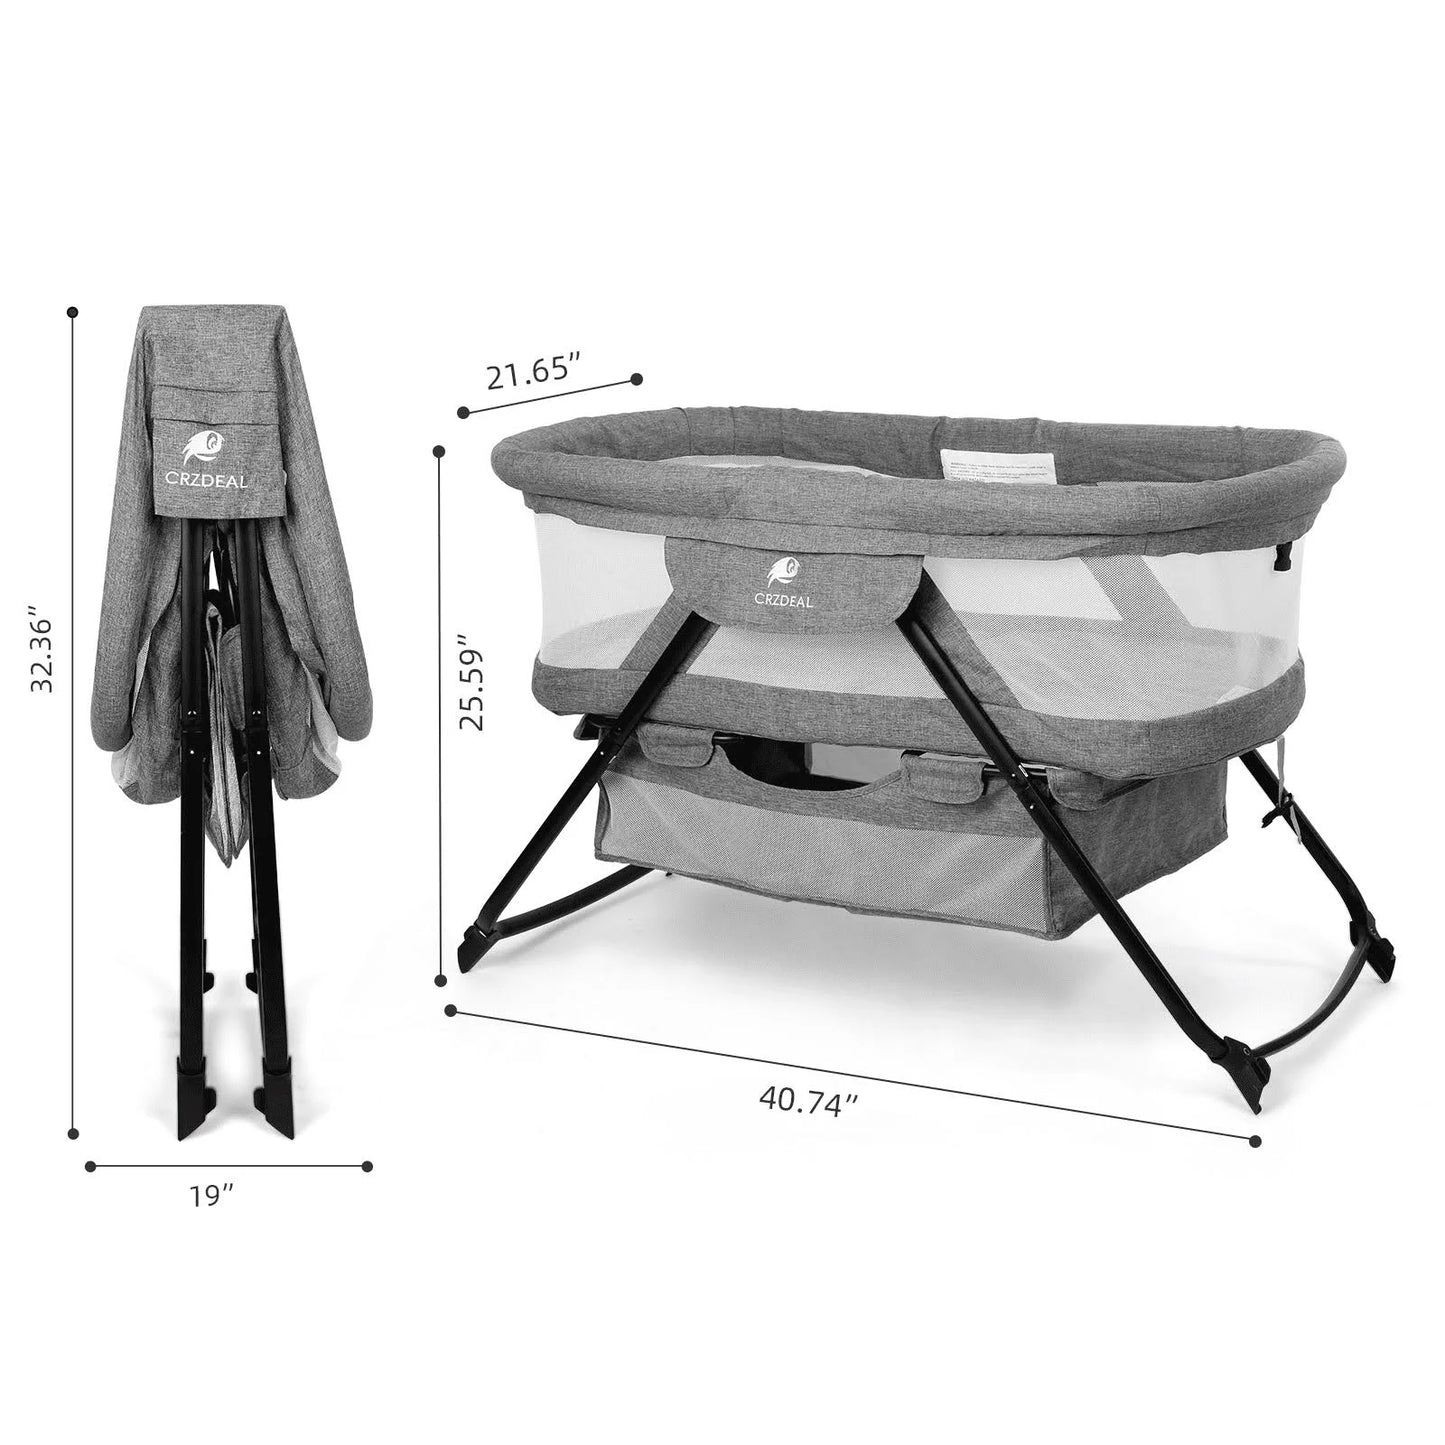 Crzdeal 搖籃 二合一折疊搖籃 適合 0-6 個月嬰兒固定式和搖籃式便攜式睡床旁